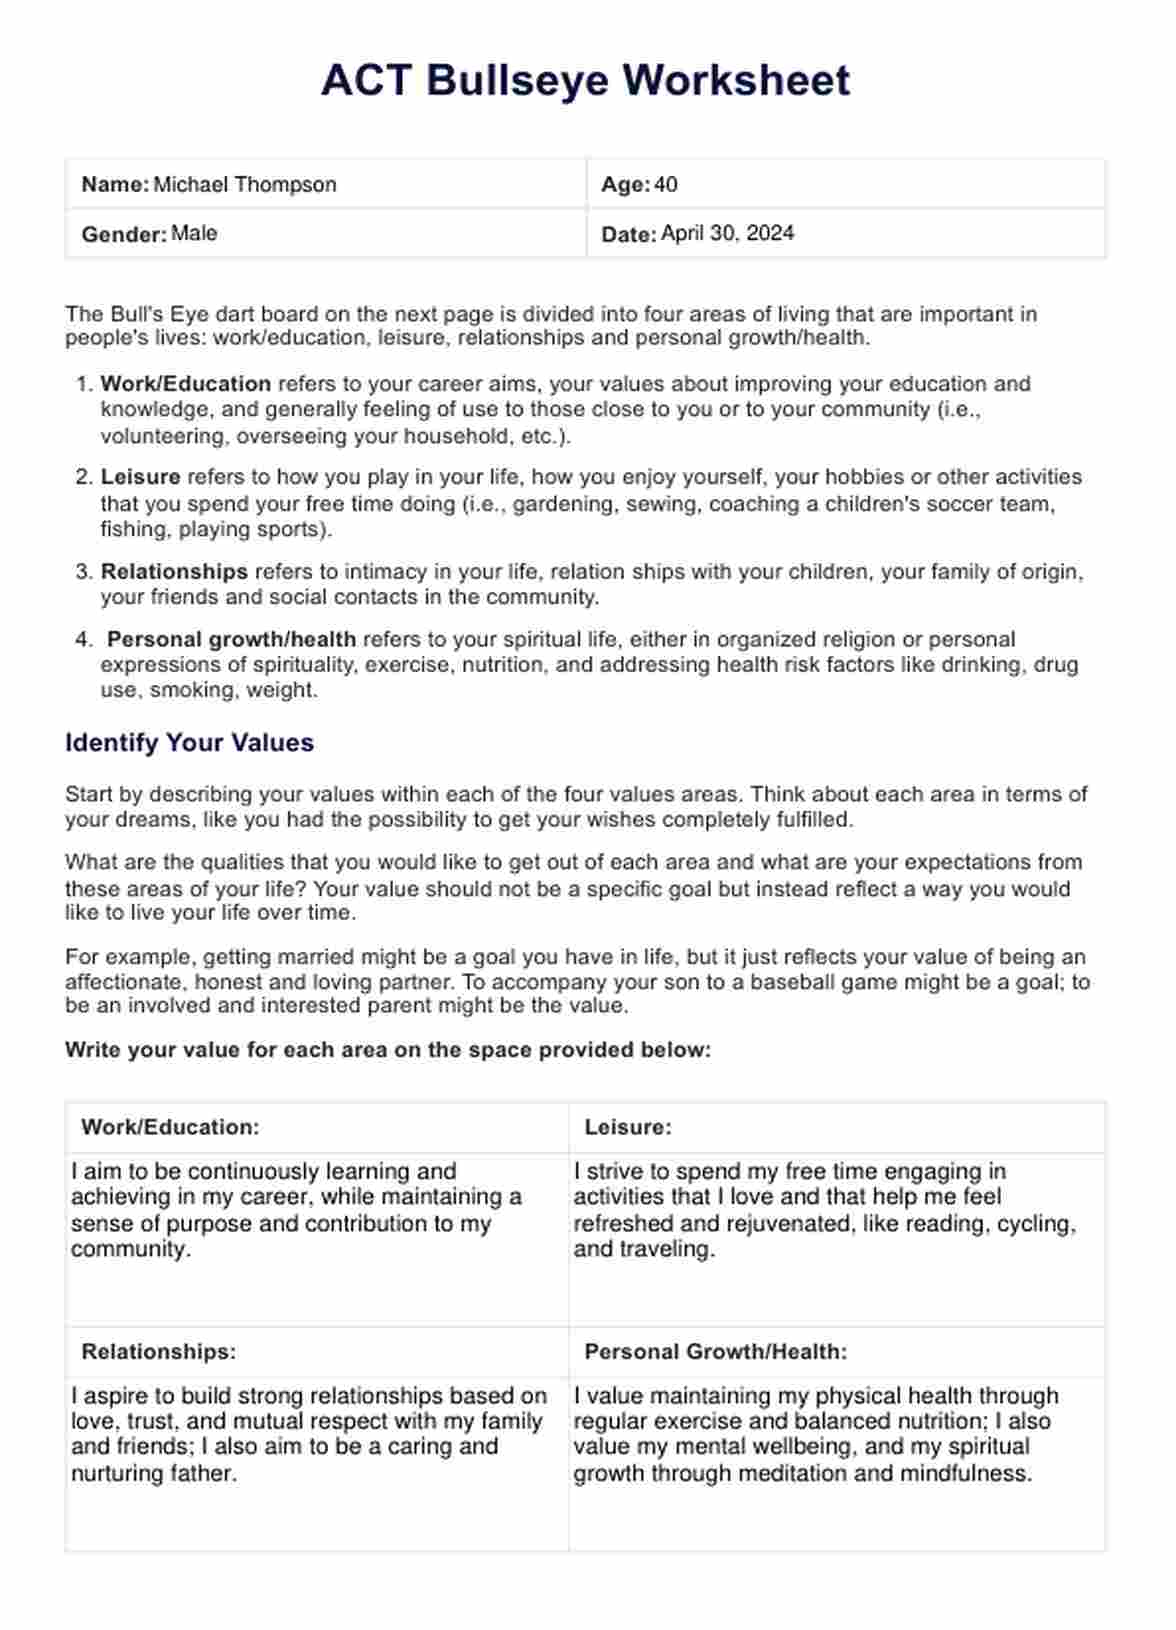 ACT Bullseye Worksheet PDF Example